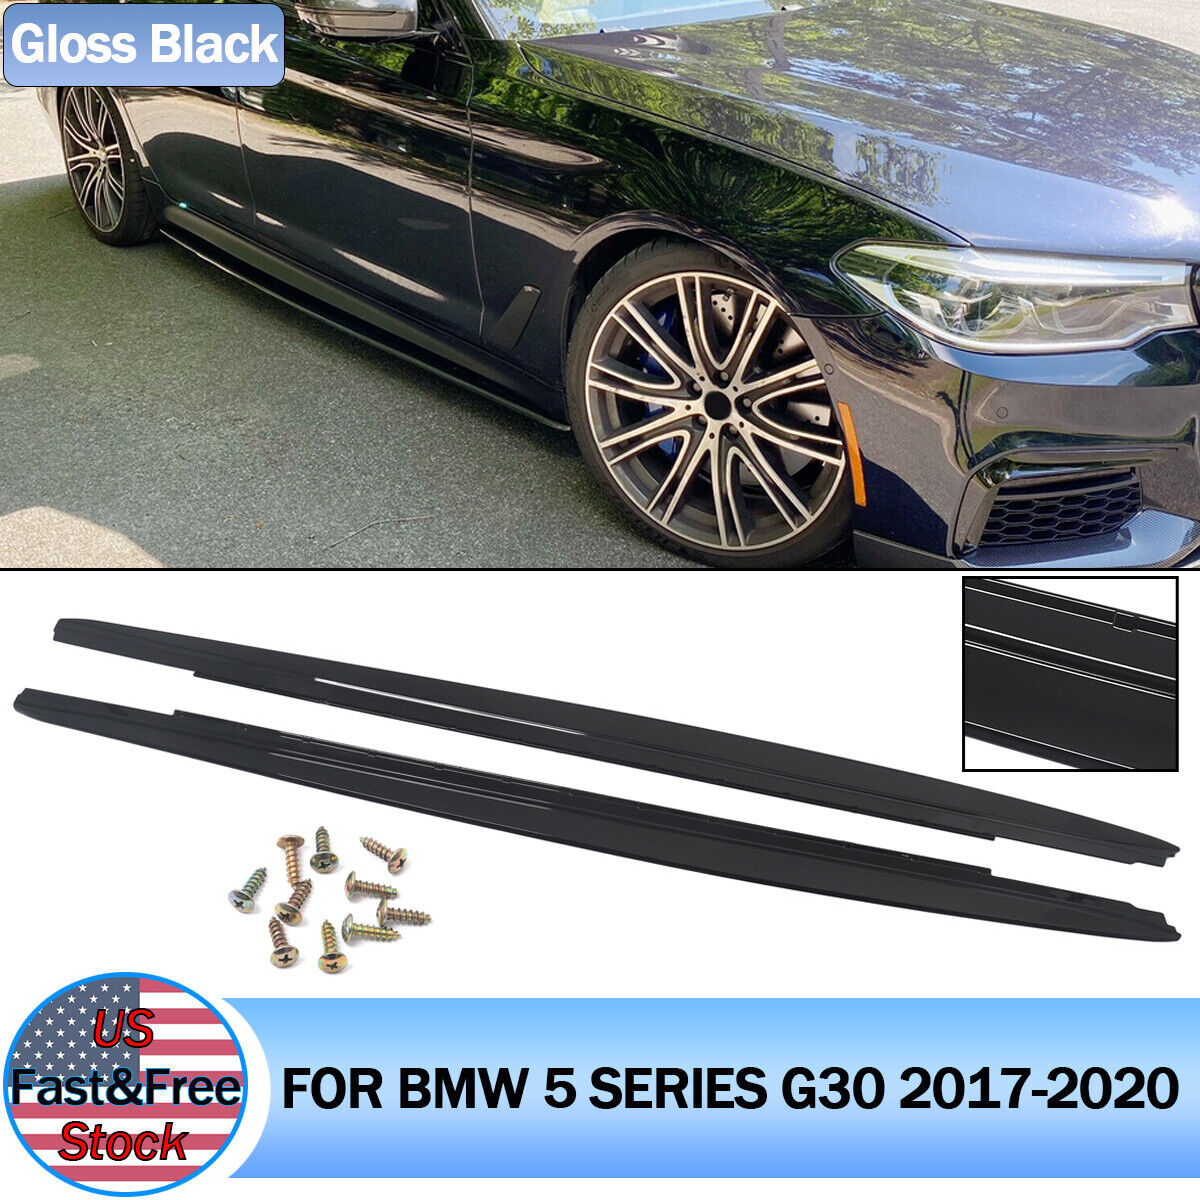 Gloss Black Side Skirts Extension Lip For BMW G30 540i M Sport F90 M5 2017-2020